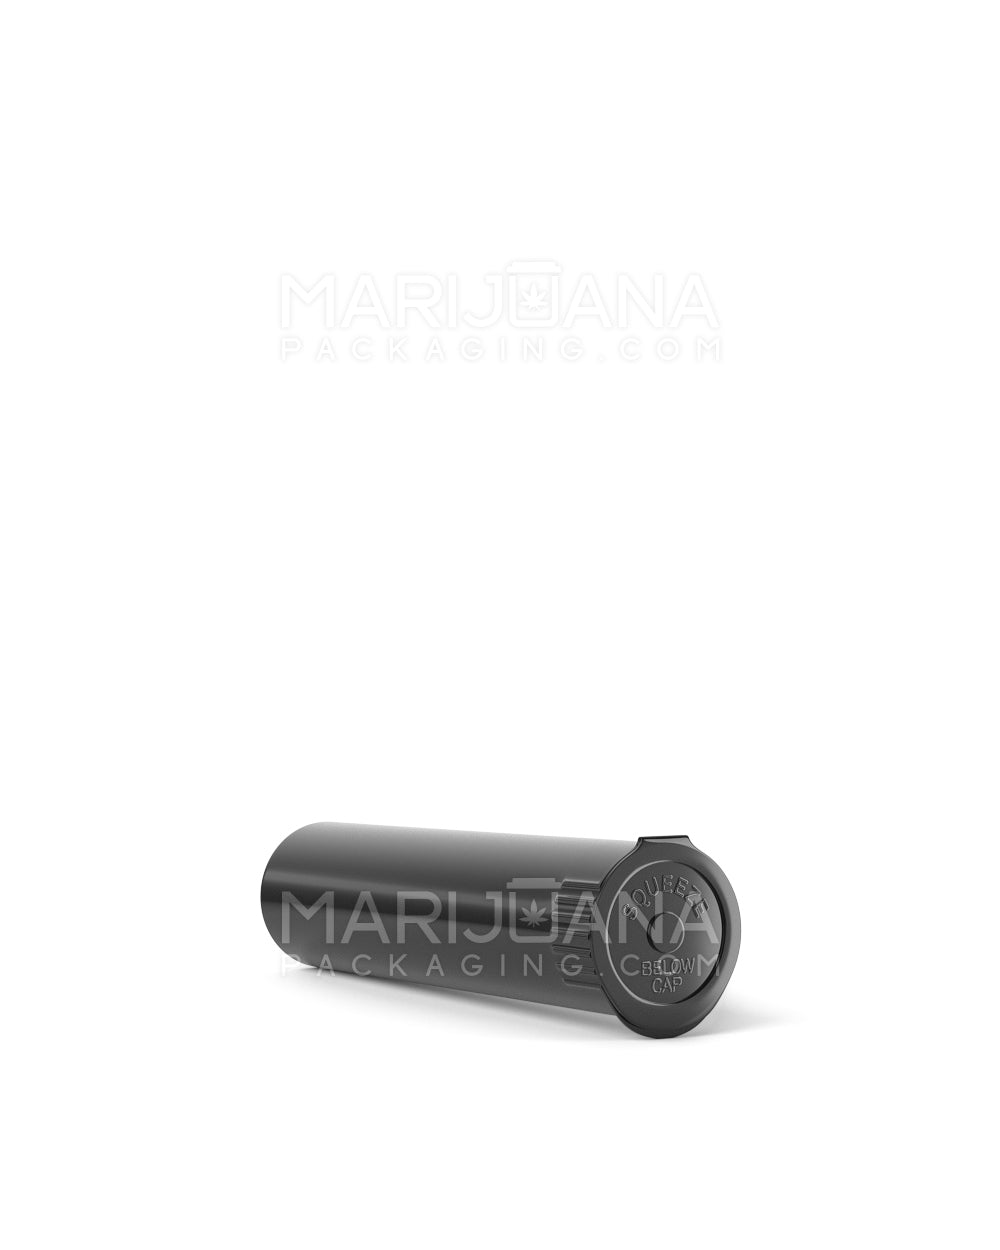 Child Resistant | Pop Top Opaque Plastic Pre-Roll Tubes (Open) | 78mm - Black - 1200 Count